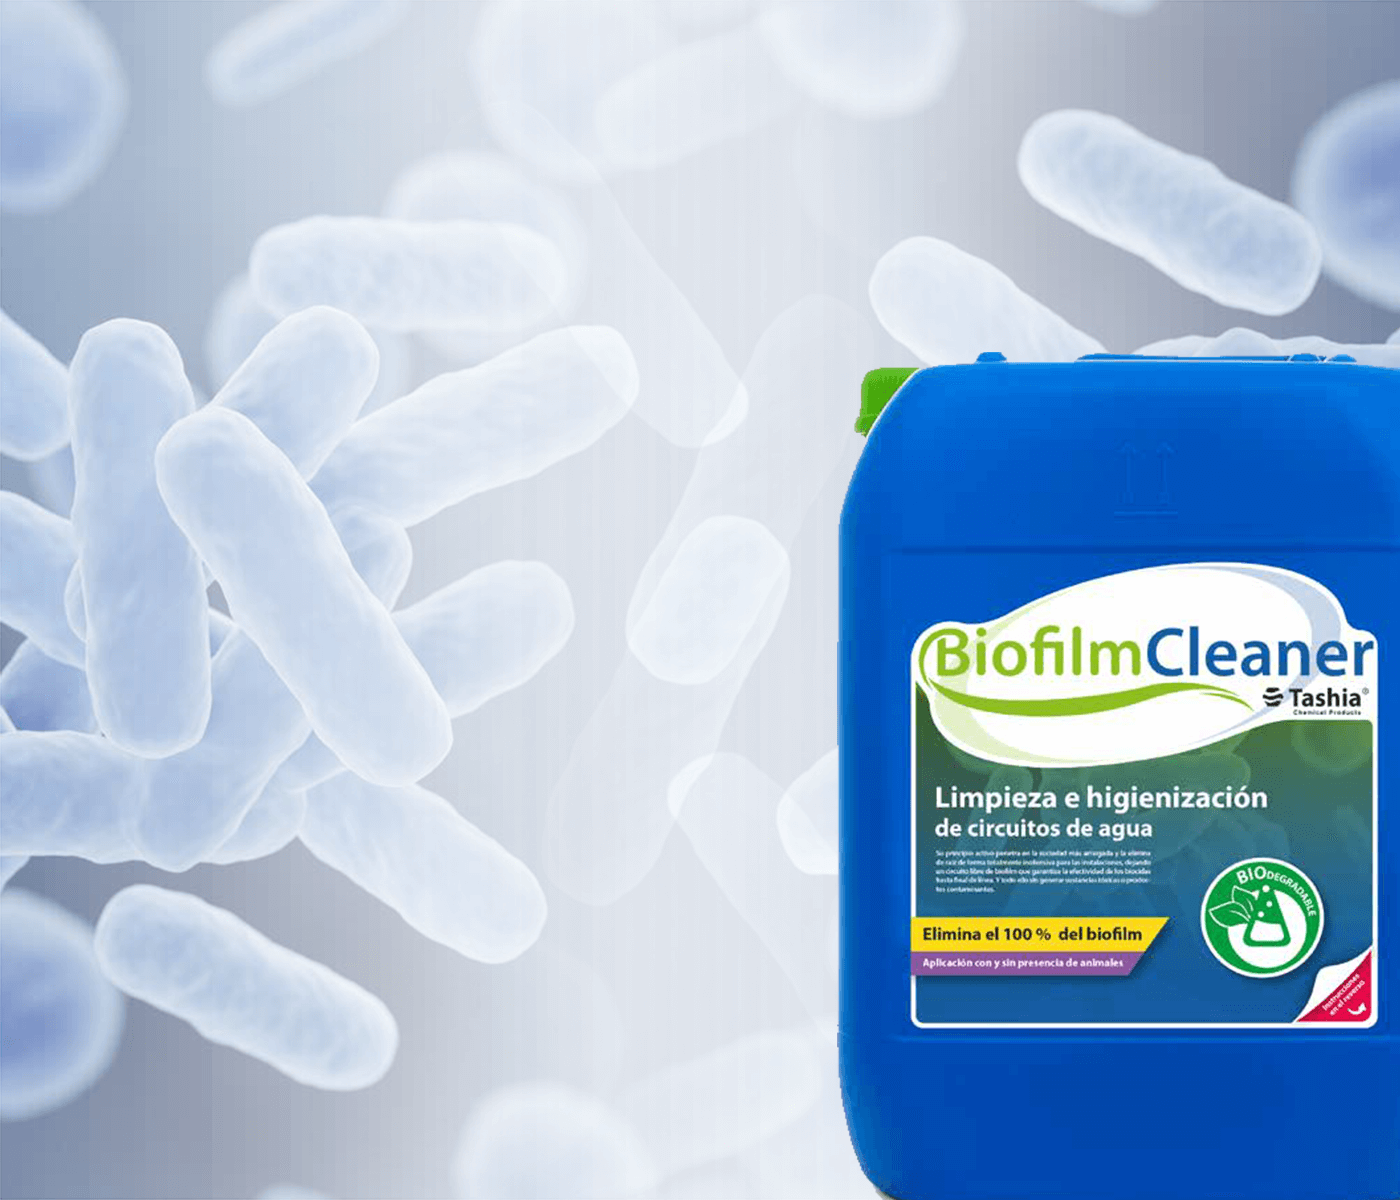 Biofilm Cleaner – Limpieza e higienización de circuitos de agua